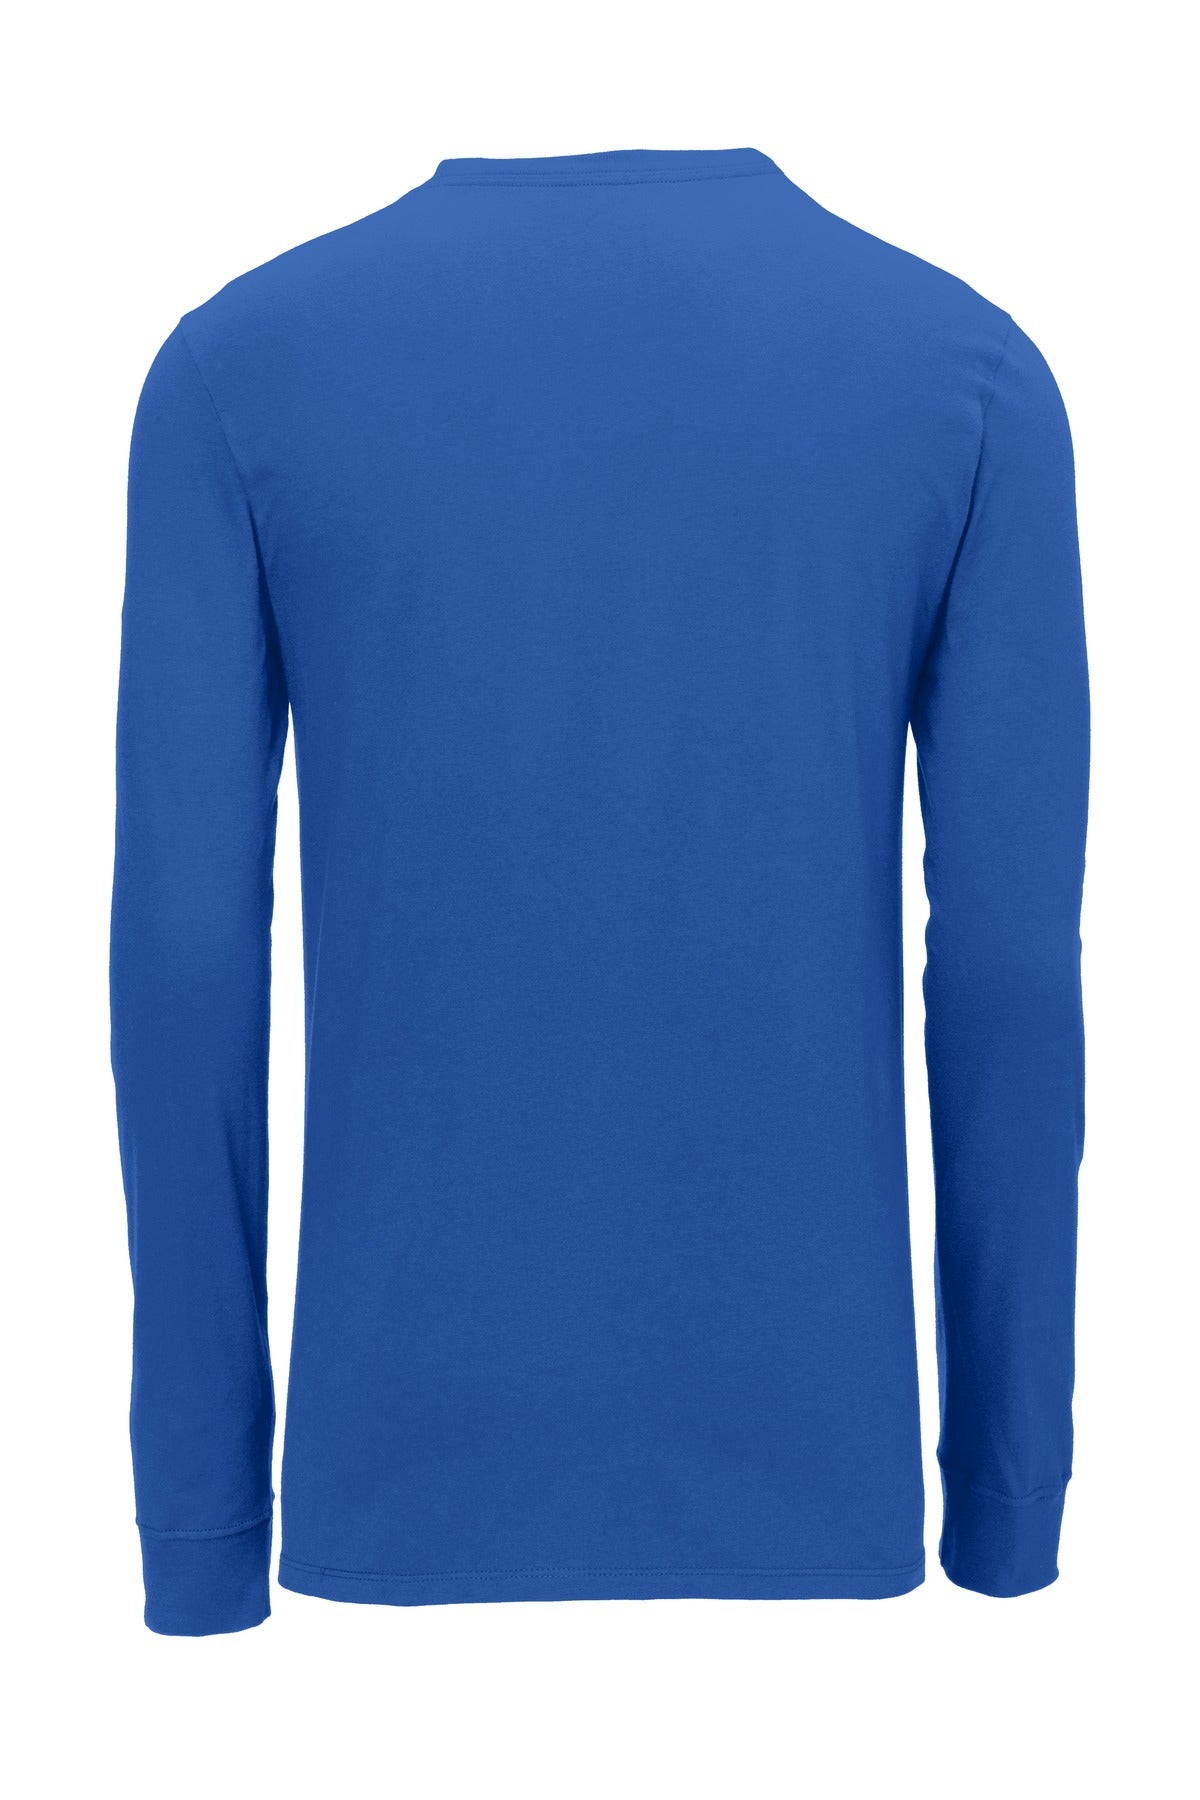 Nike Core Cotton Long Sleeve Tee. NKBQ5232 - BT Imprintables Shirts